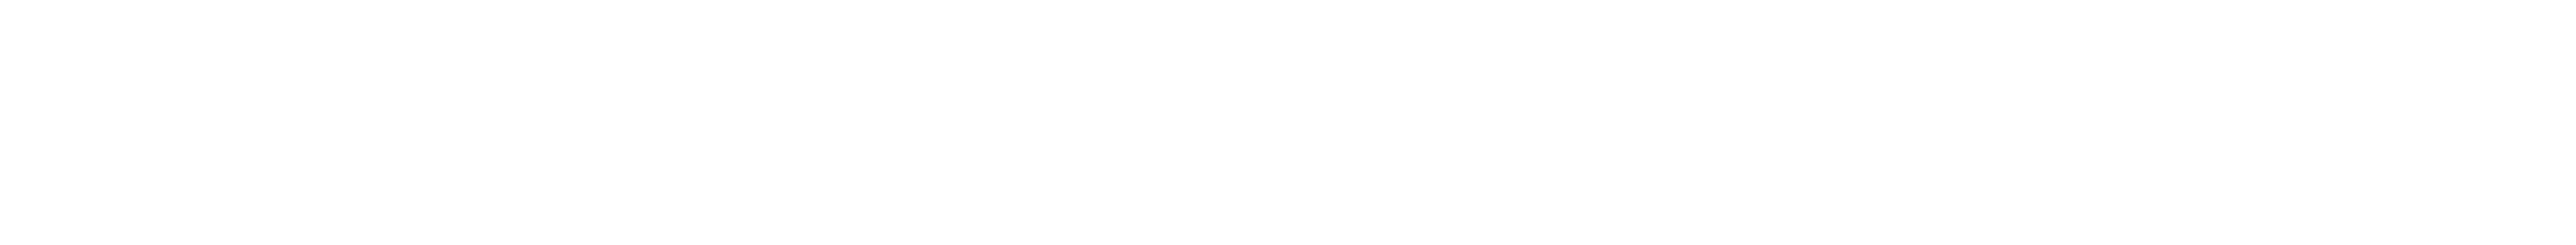 Steve Bates Photographer